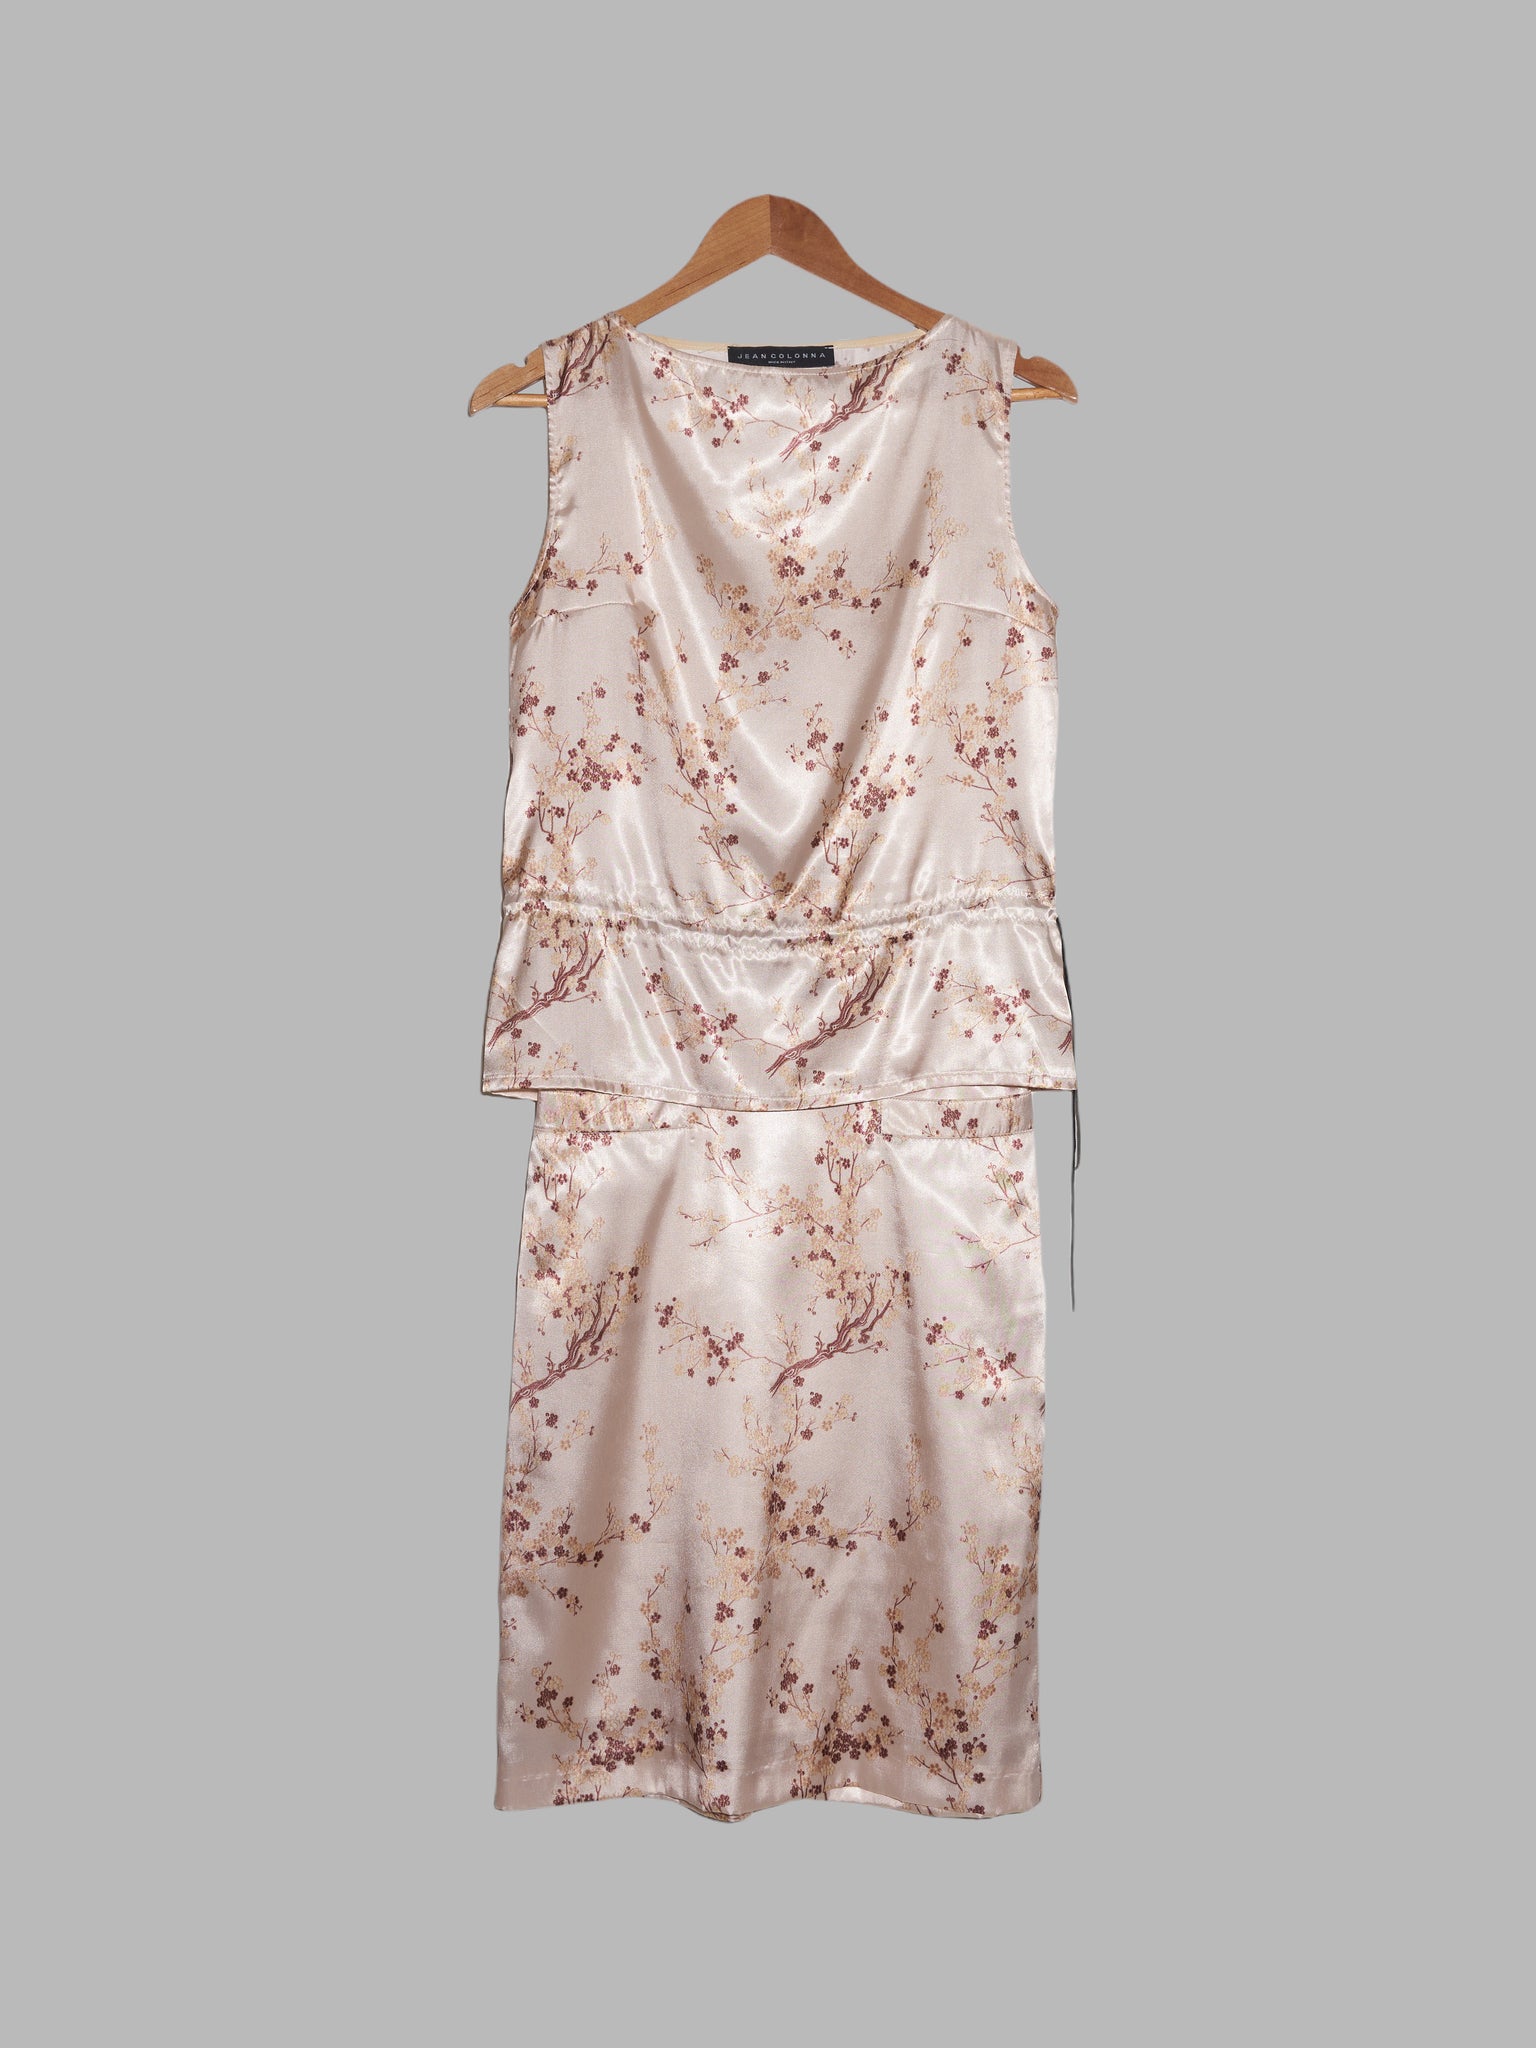 Jean Colonna AW1998 beige satin cherry blossom print sleeveless top skirt set